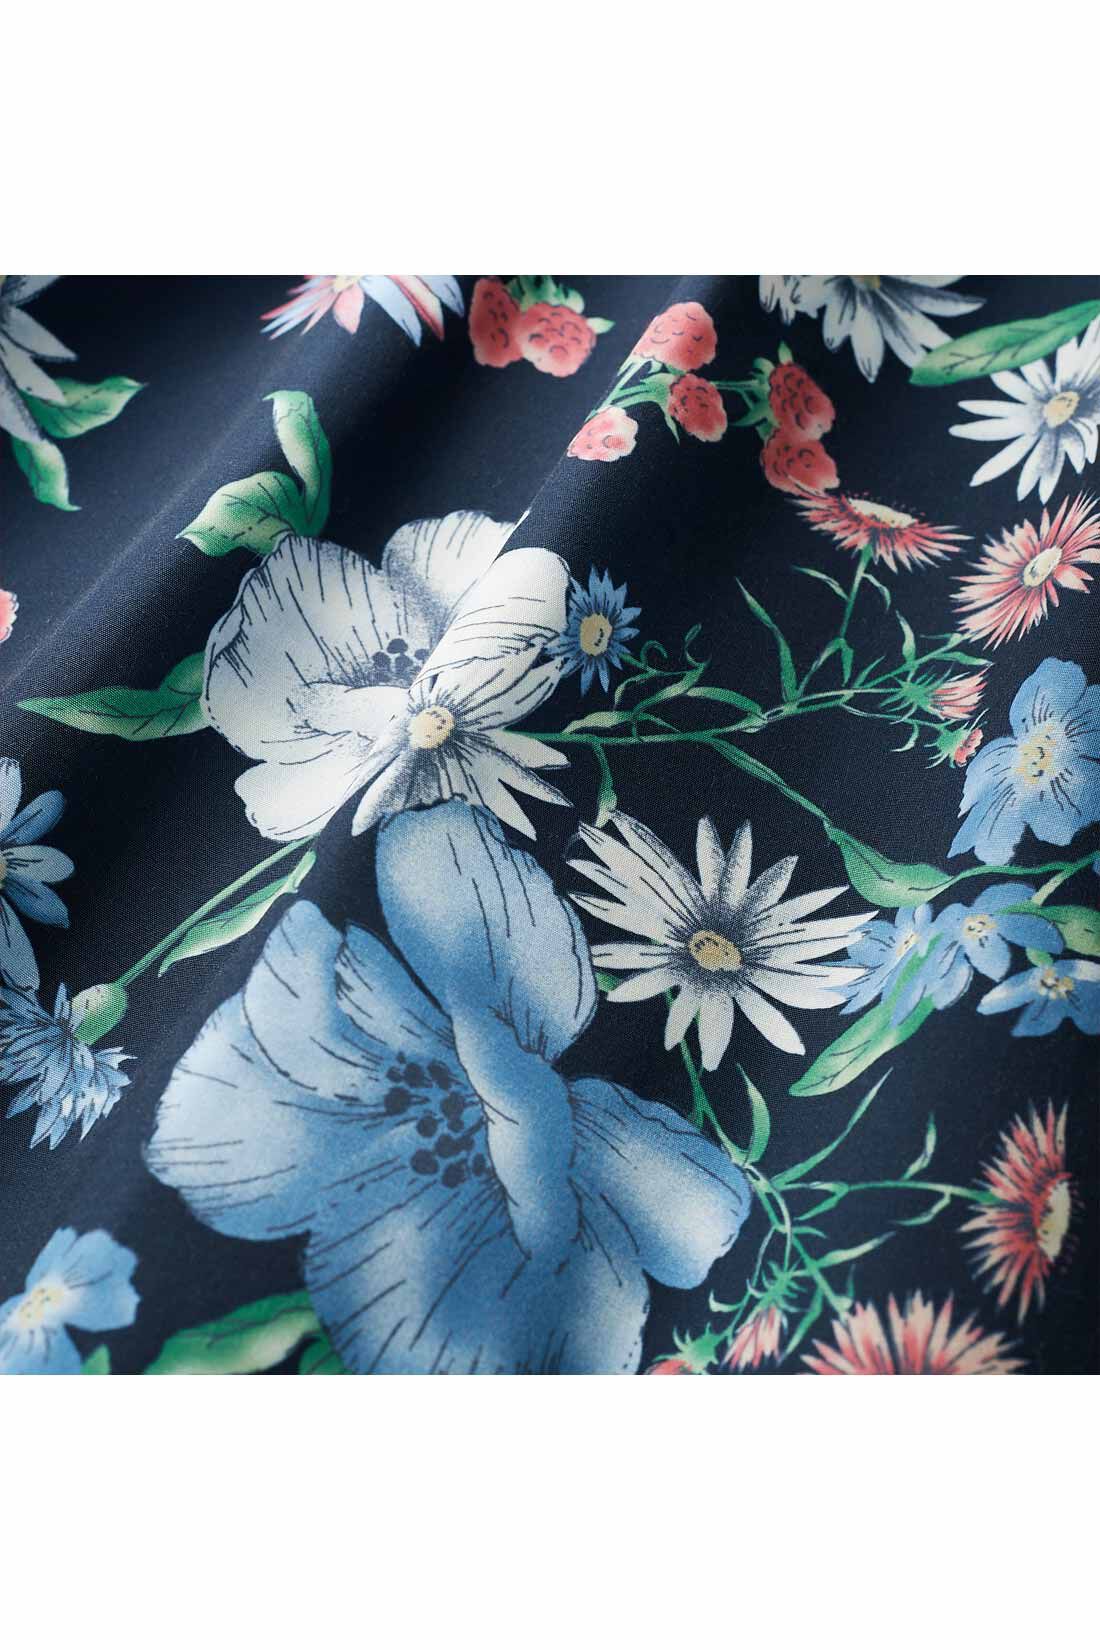 IEDIT|IEDIT[イディット] 華やか柄でコーディネイトが着映えする花柄フレアースカート〈ネイビー〉|ほどよいハリ感のある高密度なきれいめ素材。